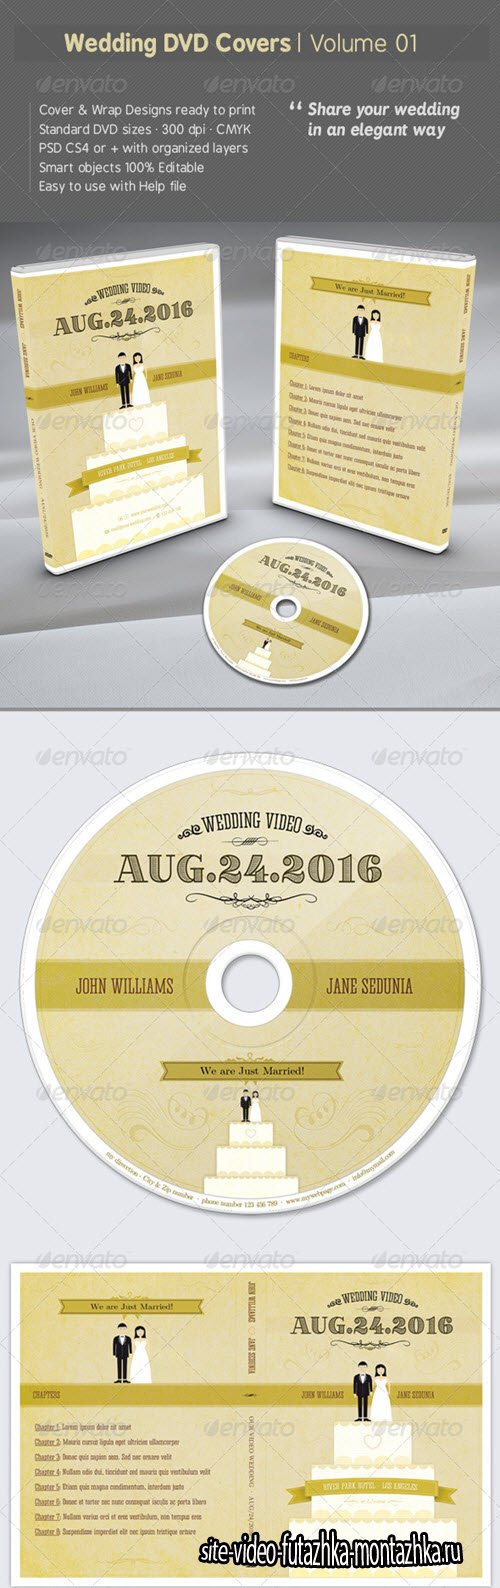 Wedding DVD Covers - Volume 01